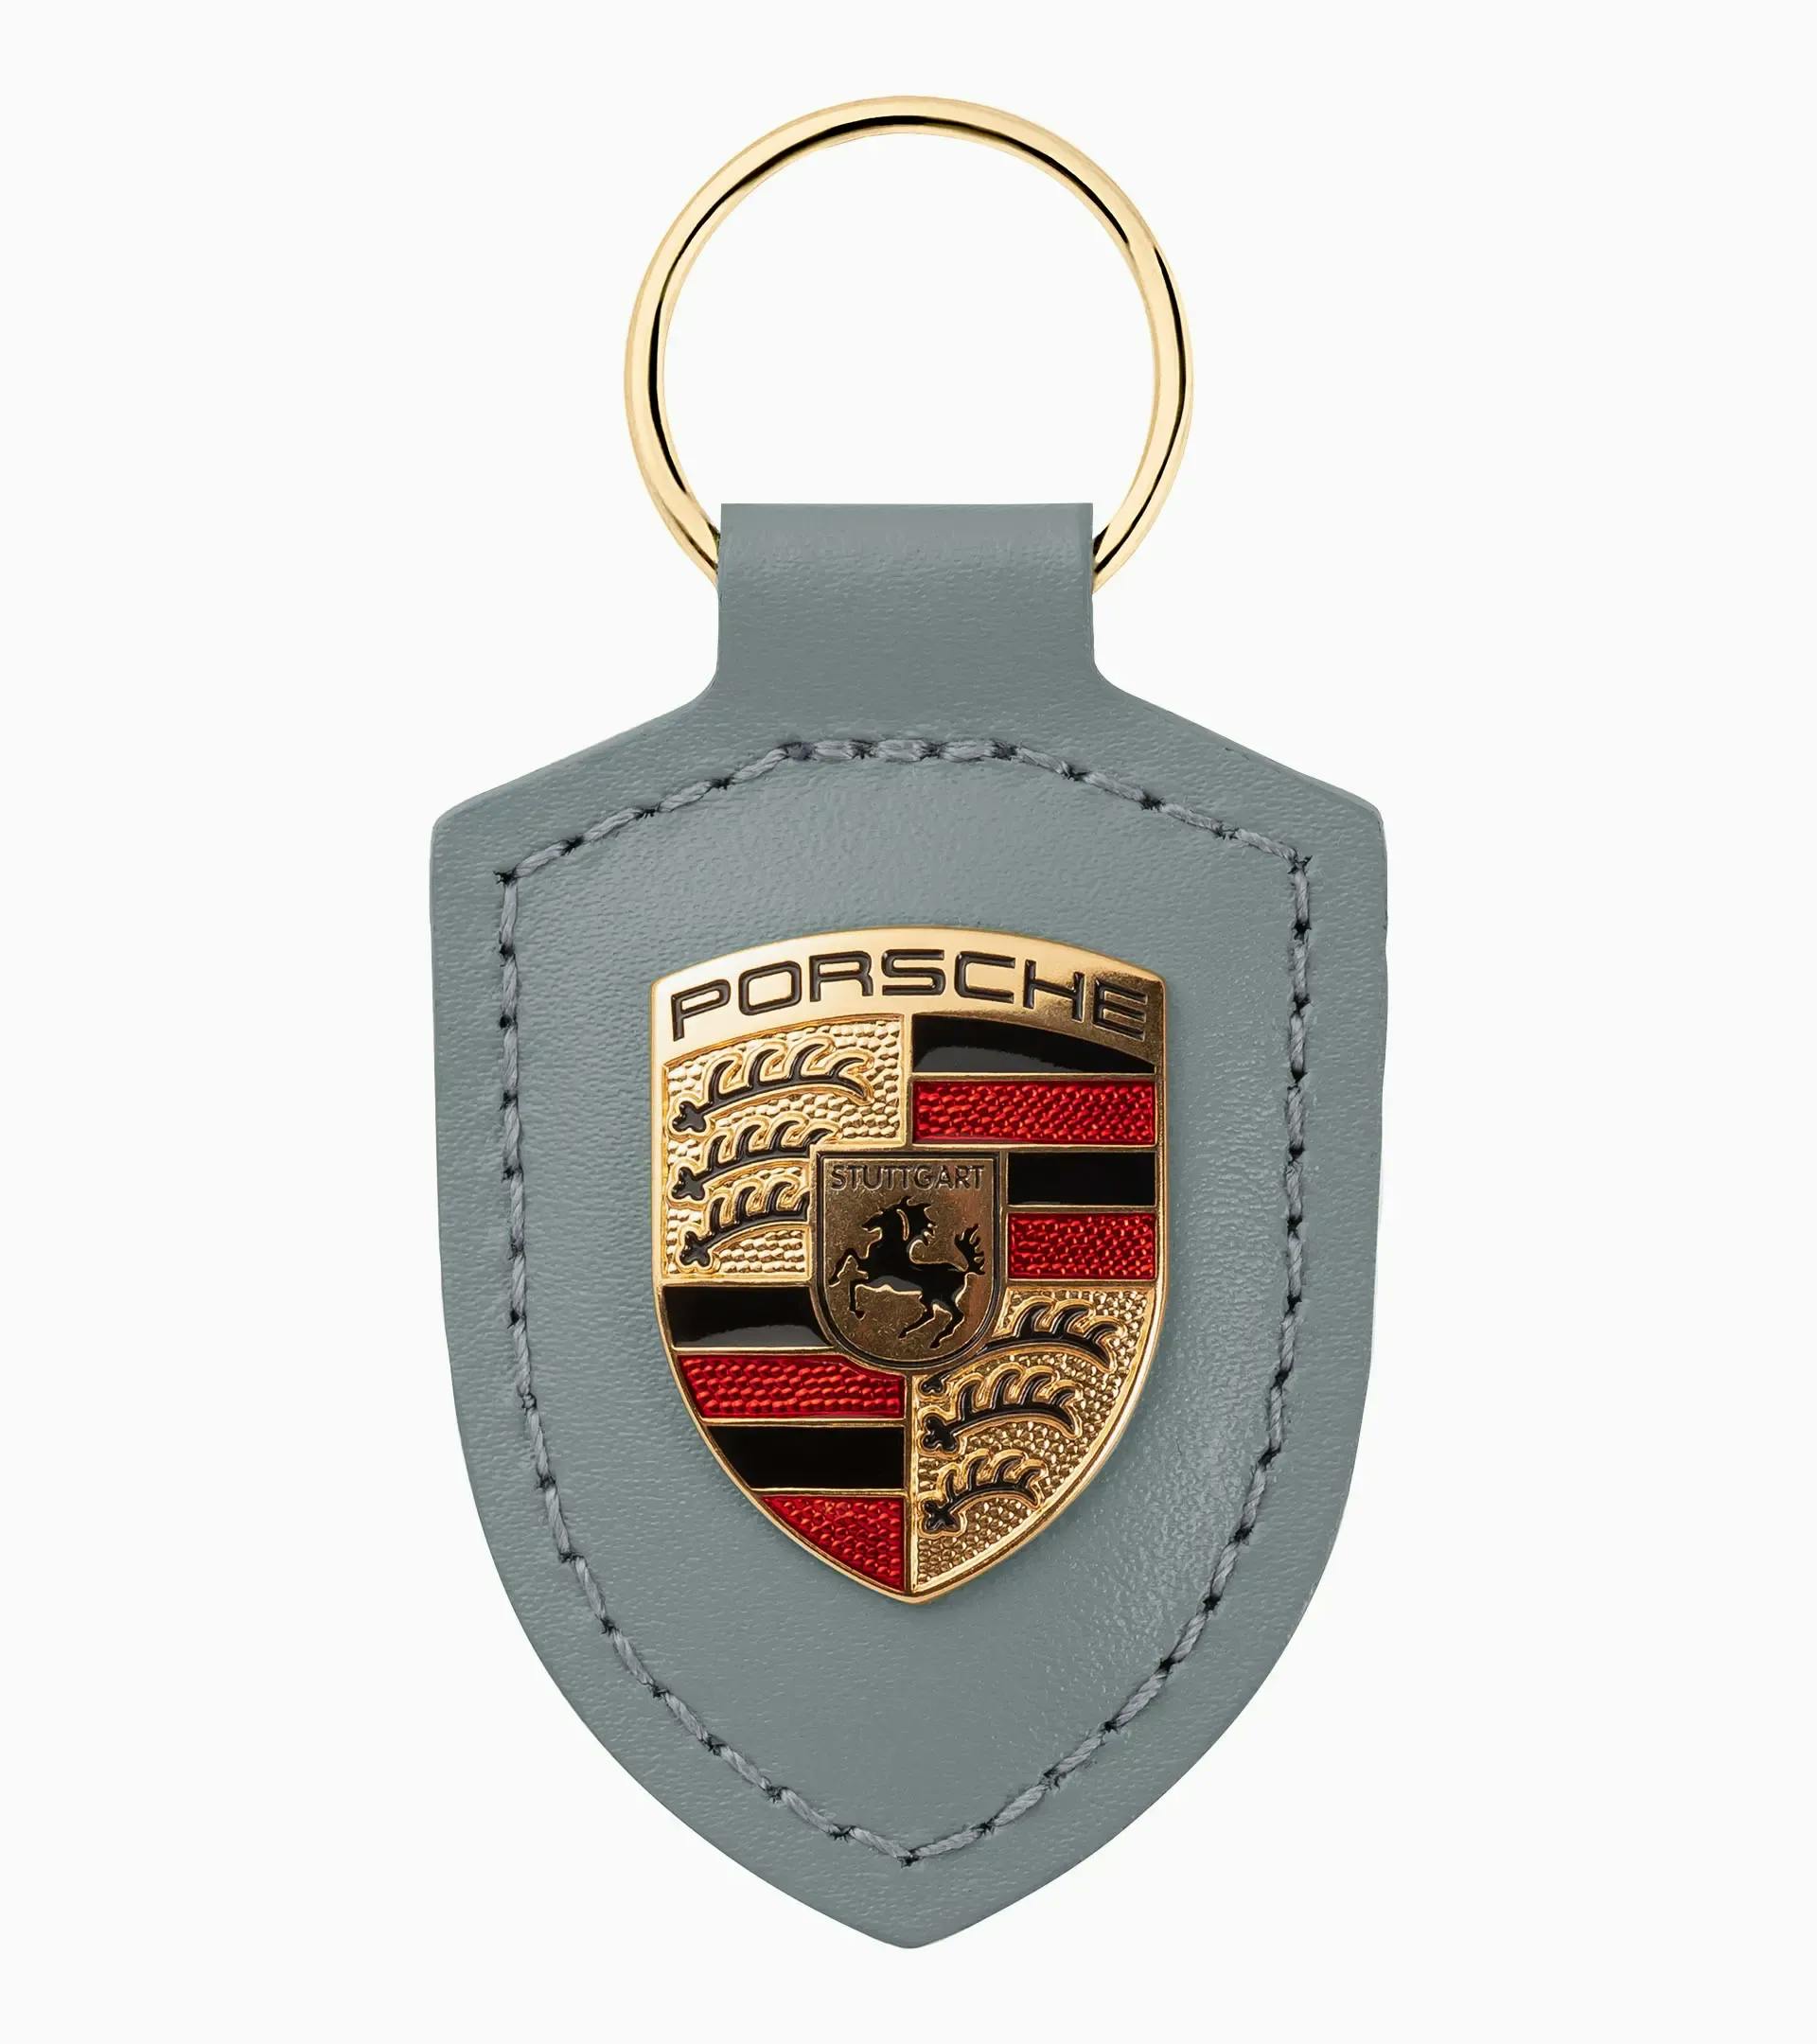 Porsche Key Replacement Service in Ann Arbor, Porsche Key Fob Replacement